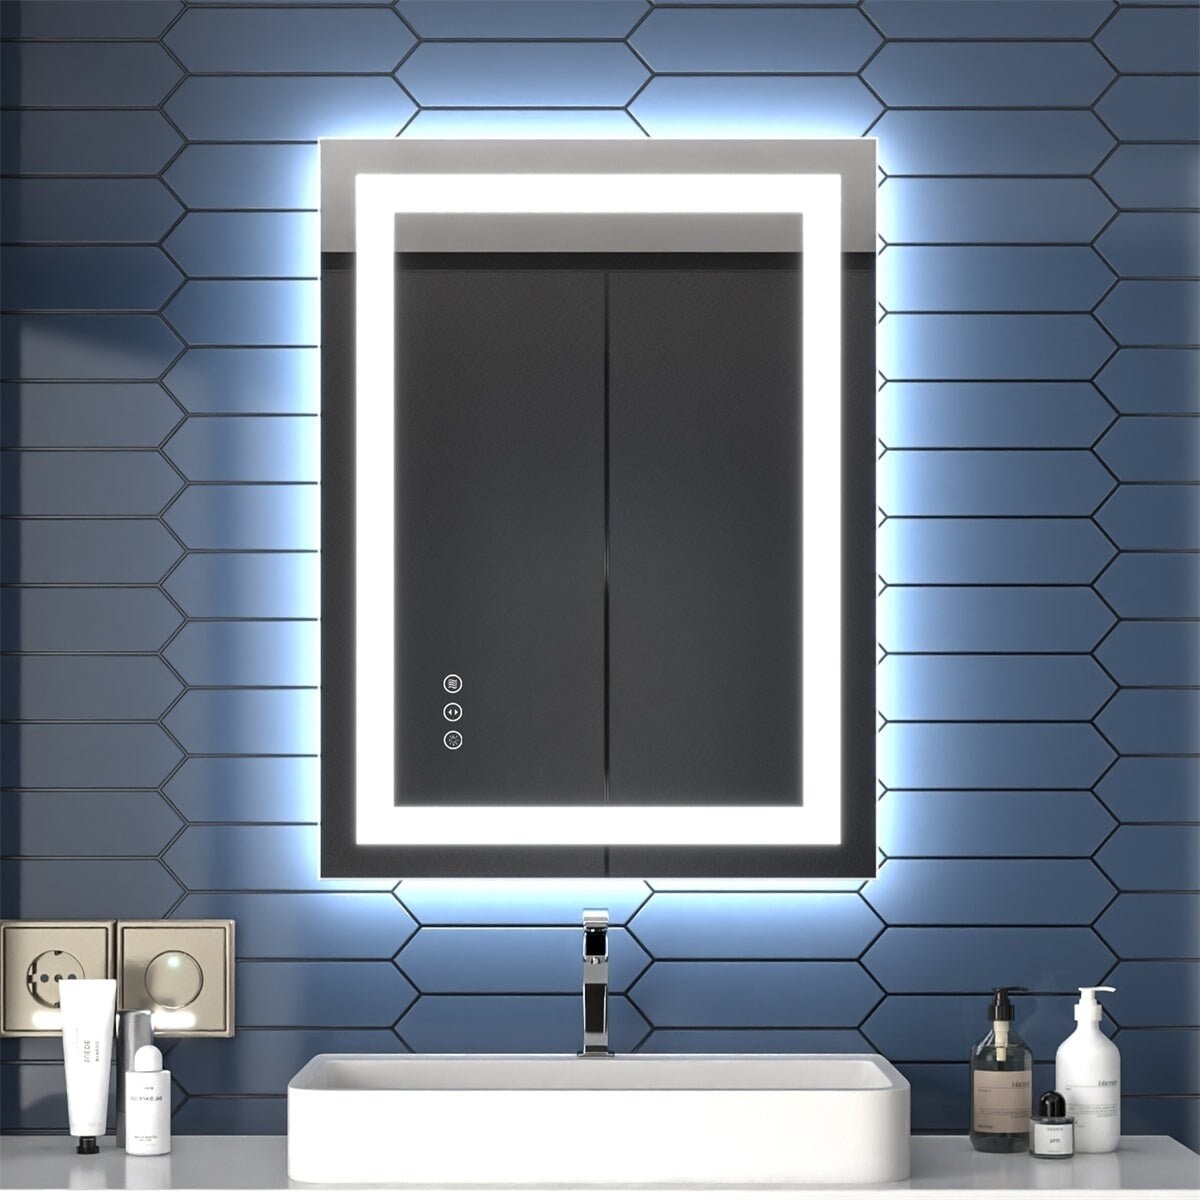 ExBriteUSA Apex 24 x 32 inch LED Bathroom Light MirrorAnti FogDimmableDual Lighting ModeTempered Glass